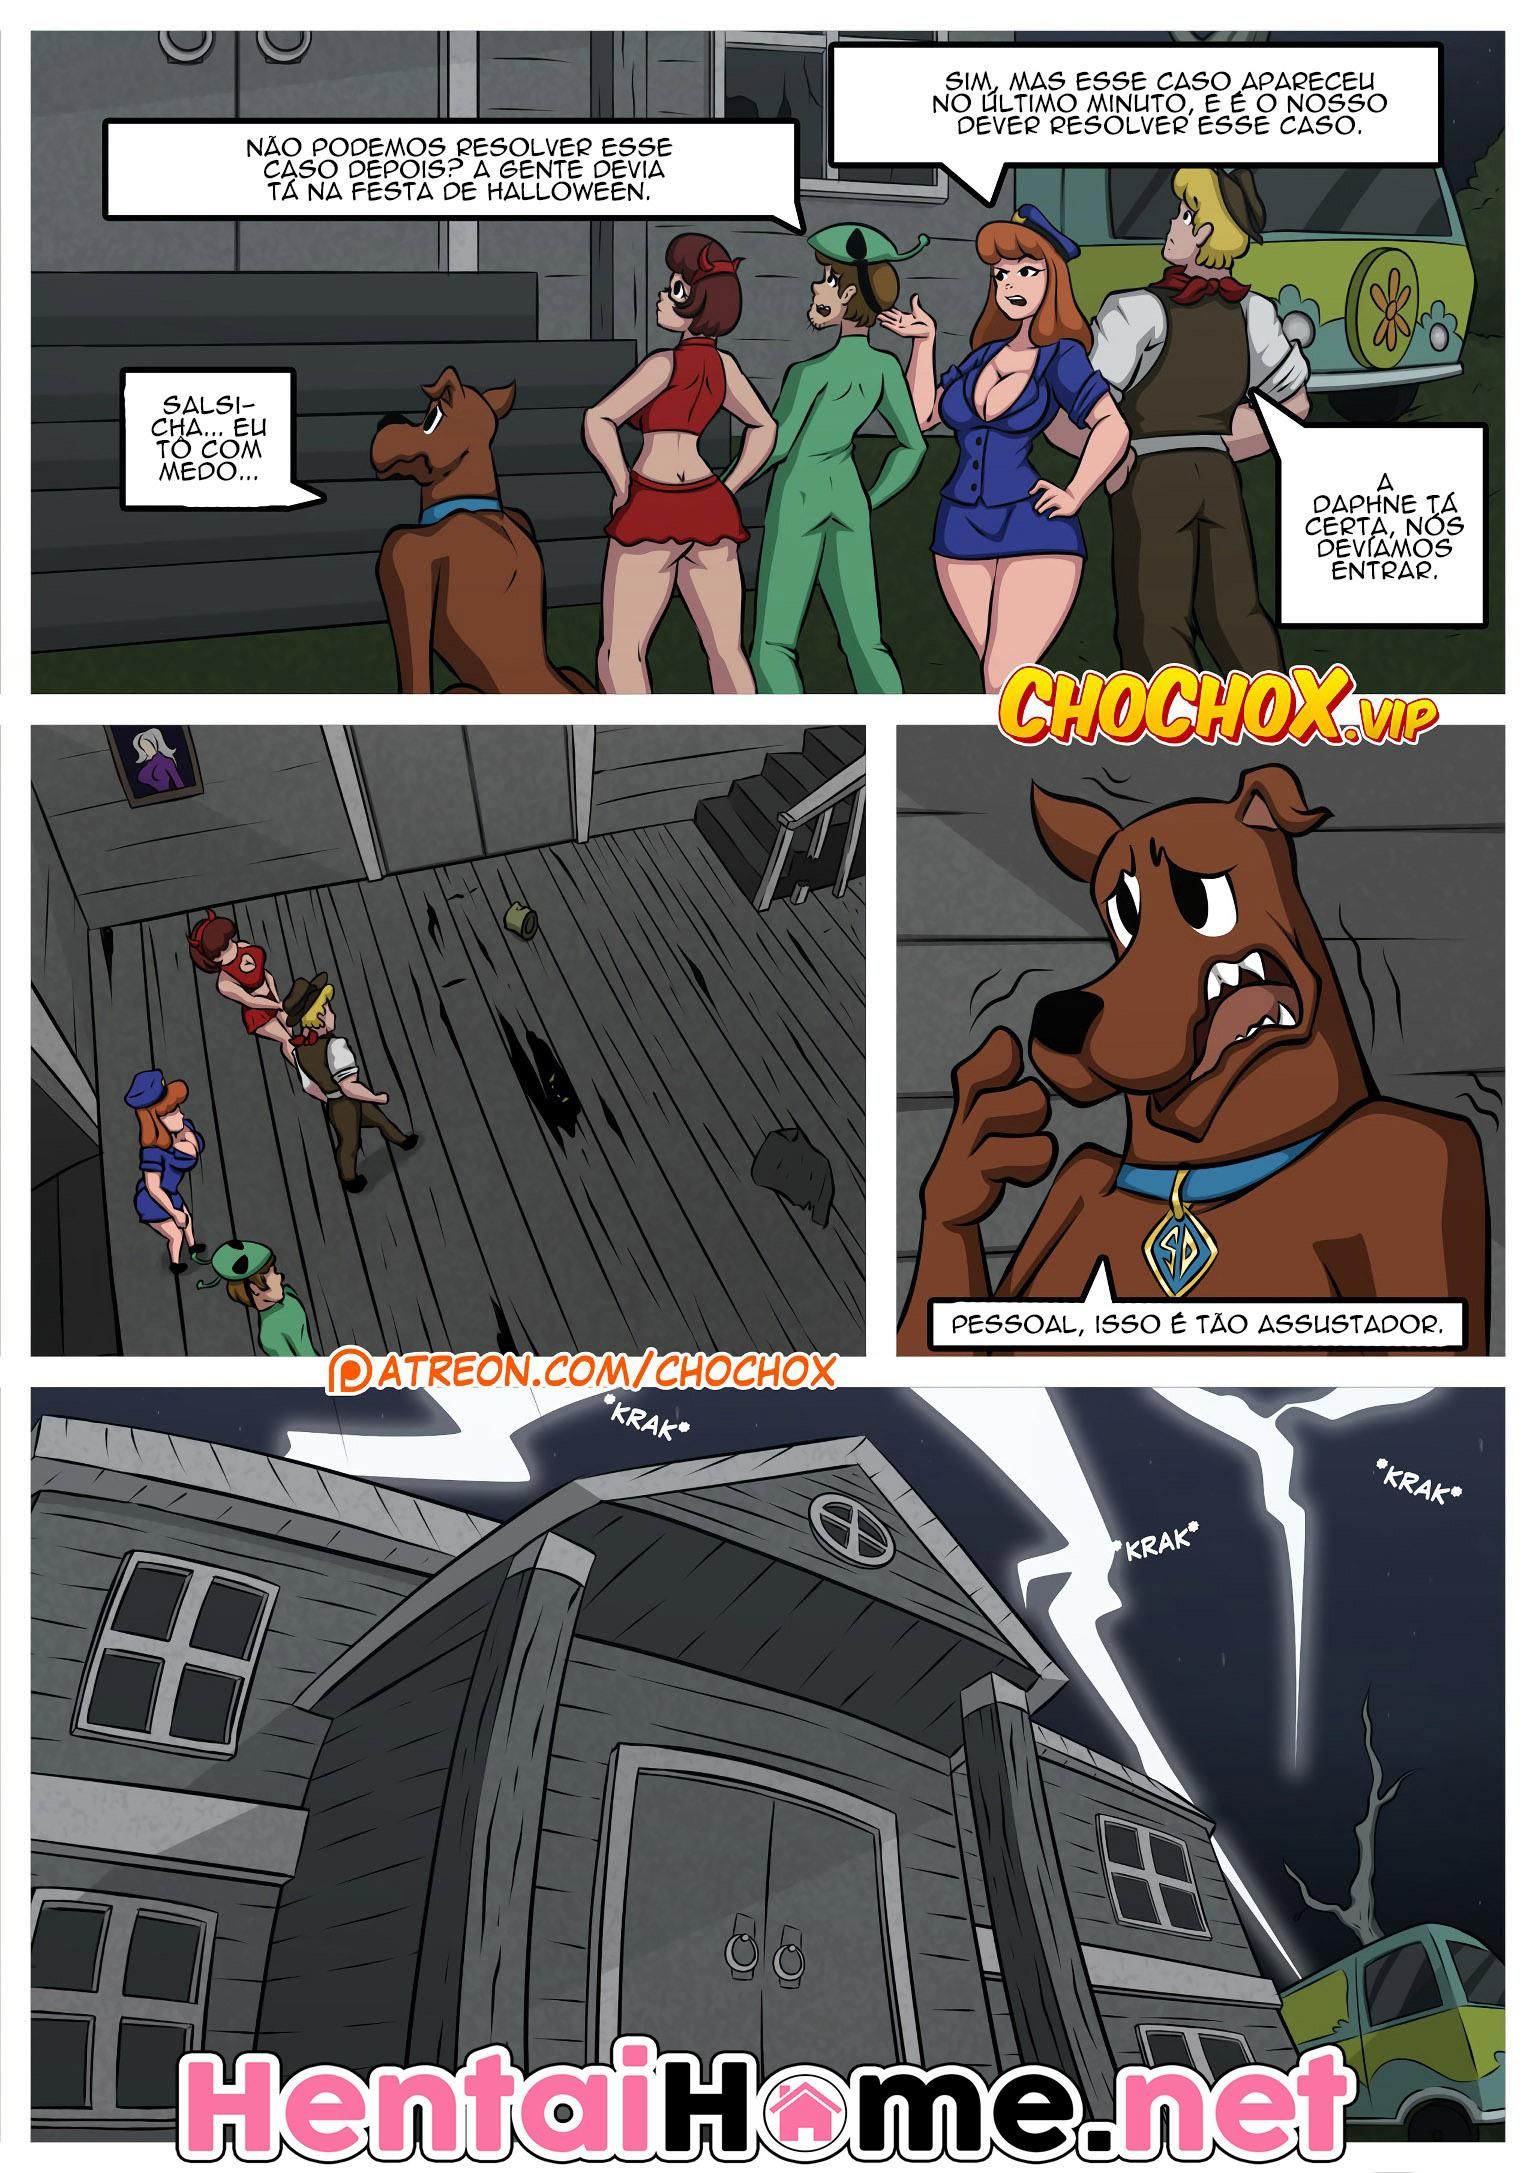 Scooby Doo Porno - A noite de Halloween